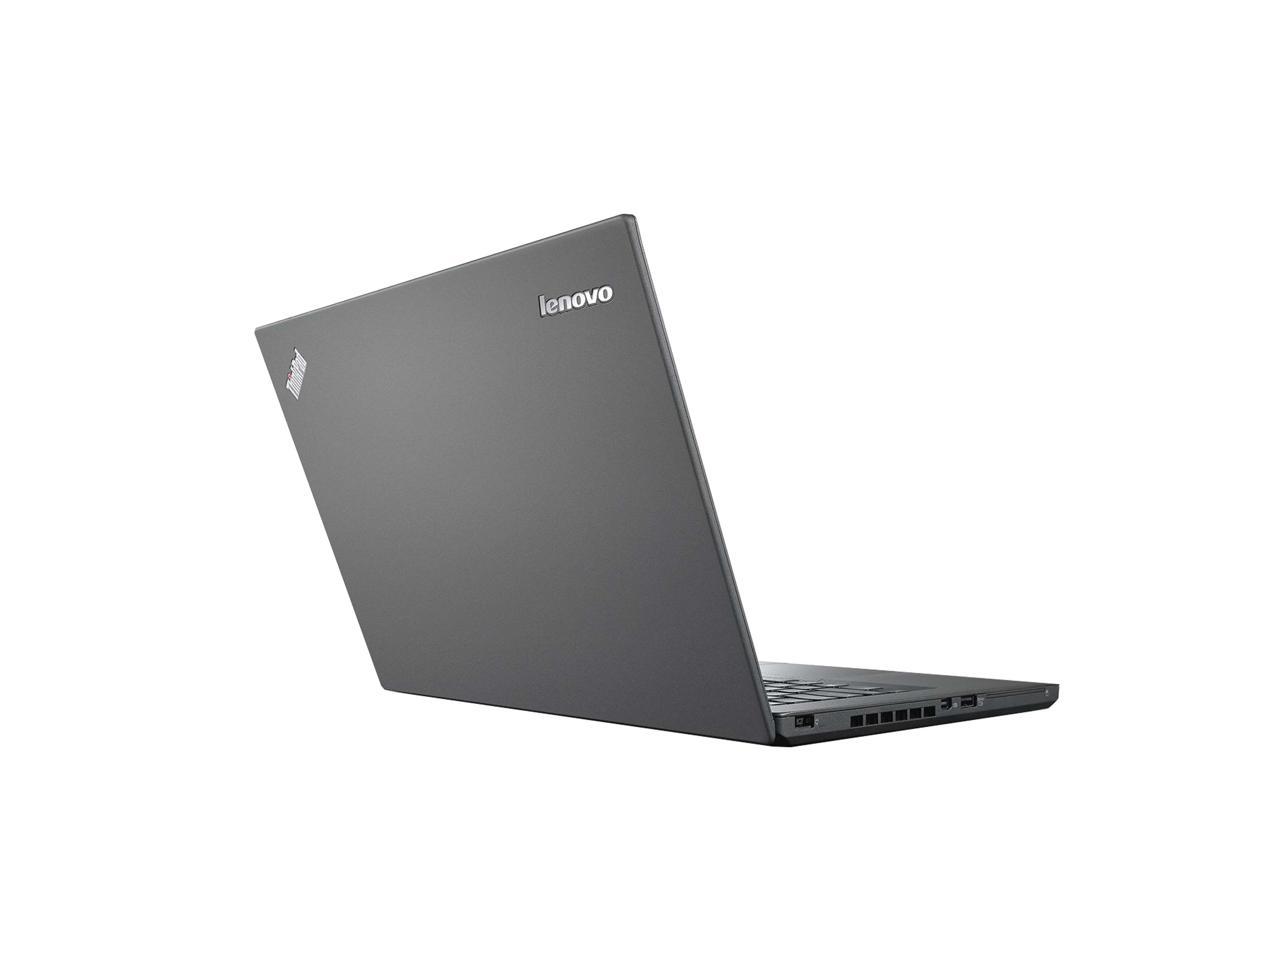 Refurbished Lenovo Grade A ThinkPad T440 Laptop, Intel Core I5 4300U 1.9GHz, 4G DDR3L, 512G SSD, WiFi, 14INCH , W10Pro 64-bit Multi-Language, 1 Year Warranty